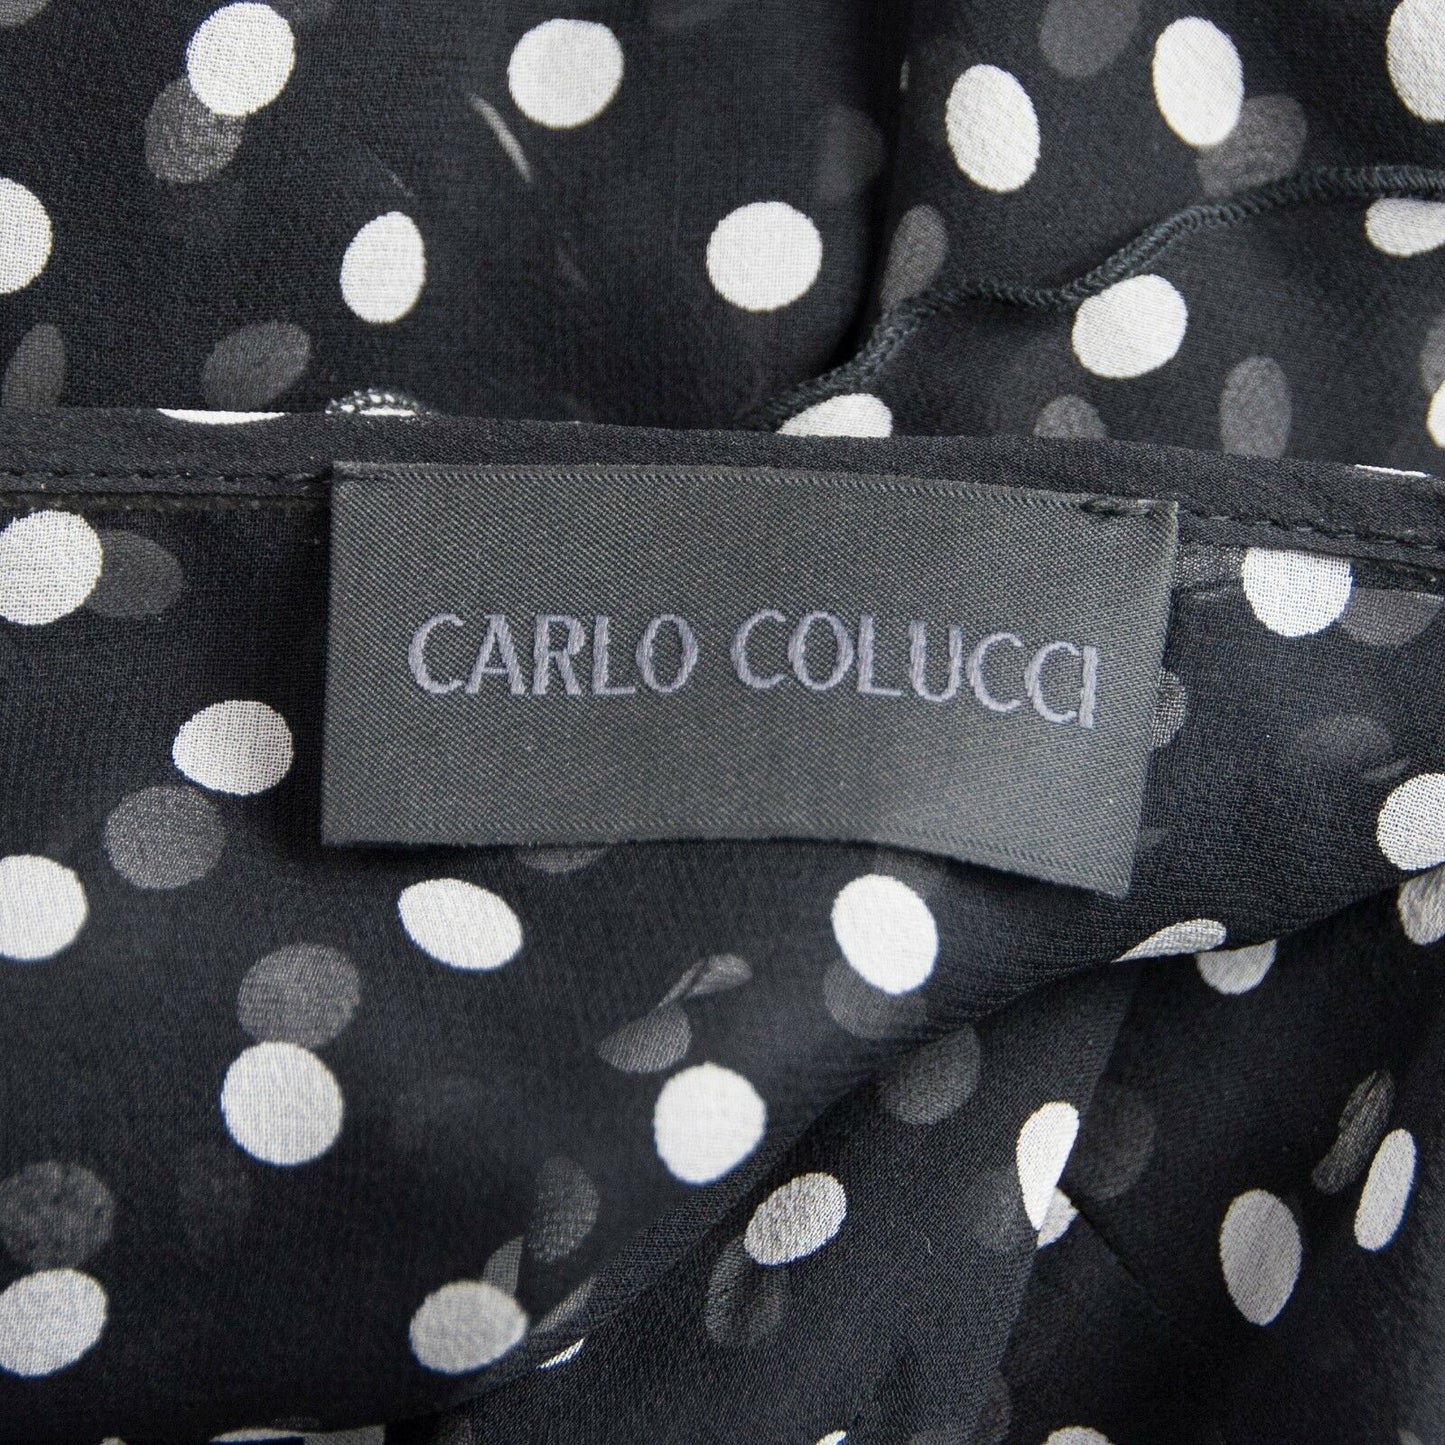 Carlo Colucci Silk Black Ruffle Tuxedo Polka Dot Blouse 38 Made in Italy RT $395